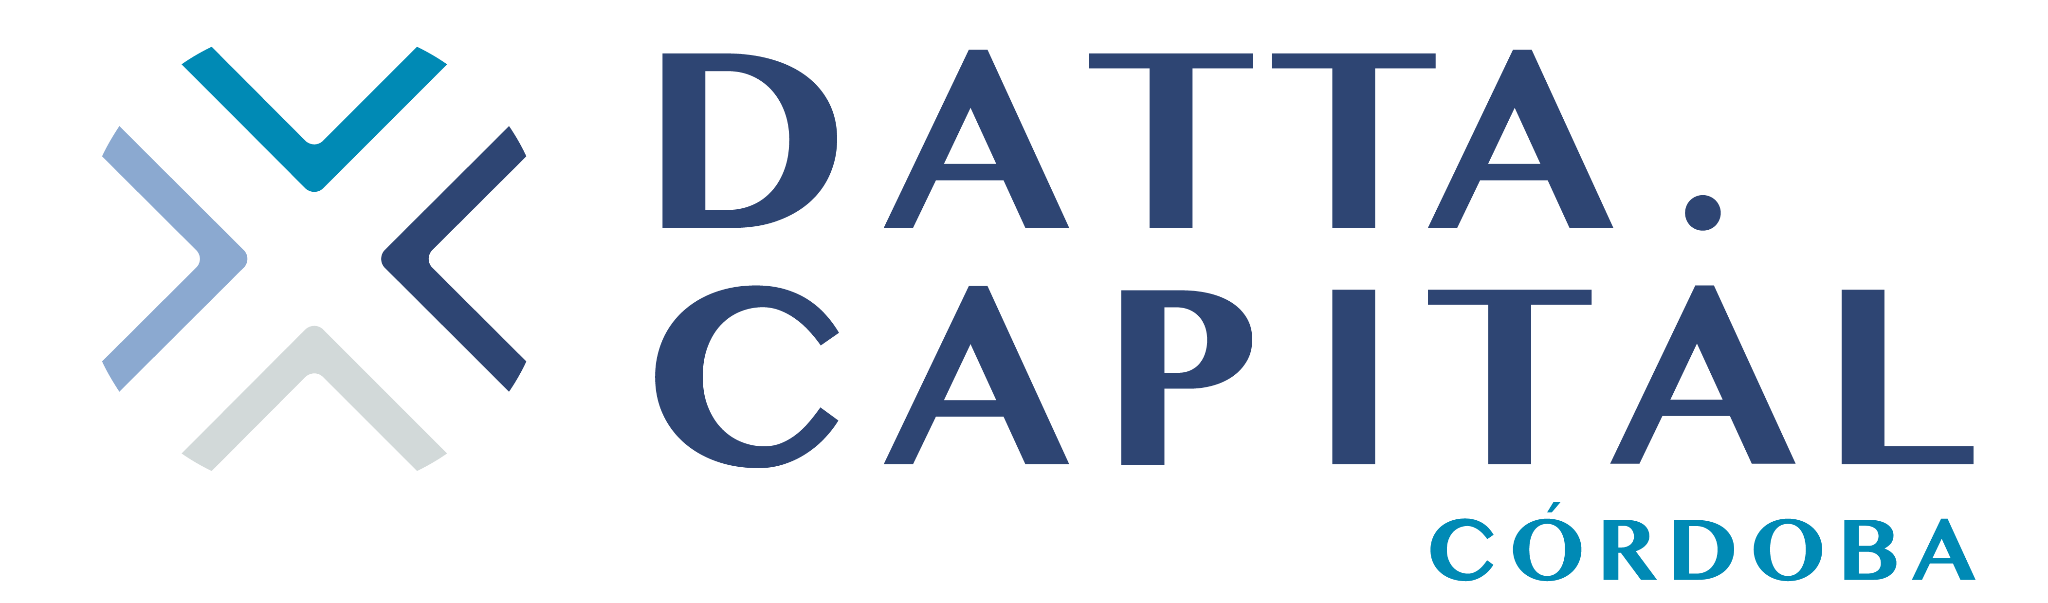 Datta Capital